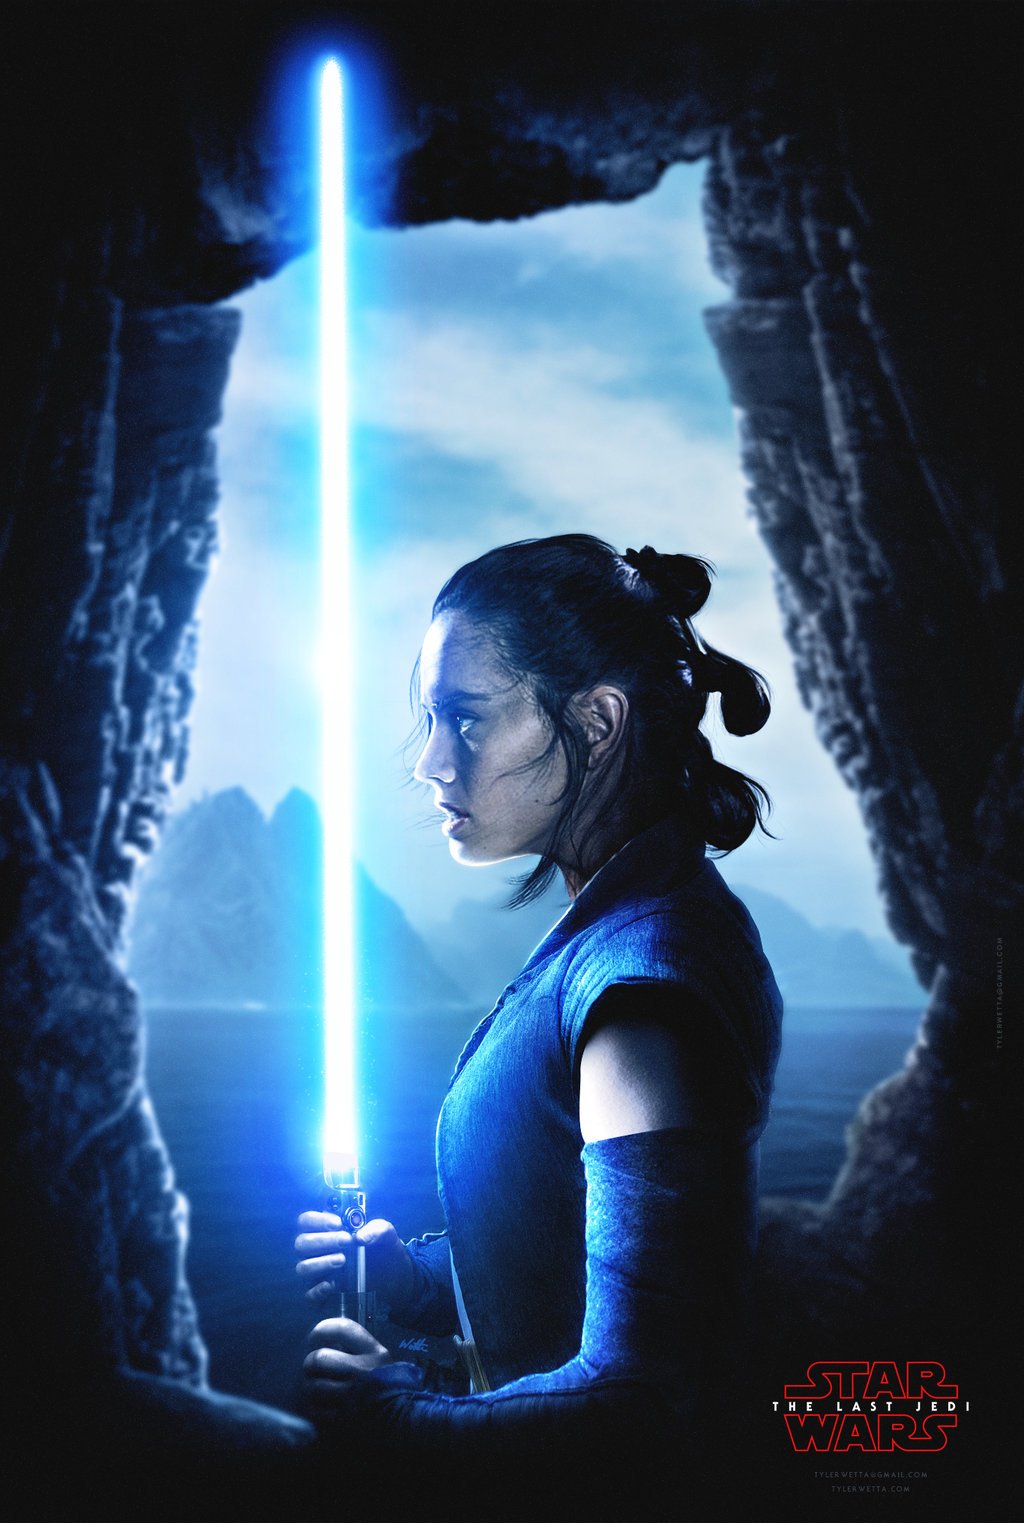 Daisy Ridley, Star Wars: The Last Jedi, Rey (from Star Wars), Lightsaber Wallpaper